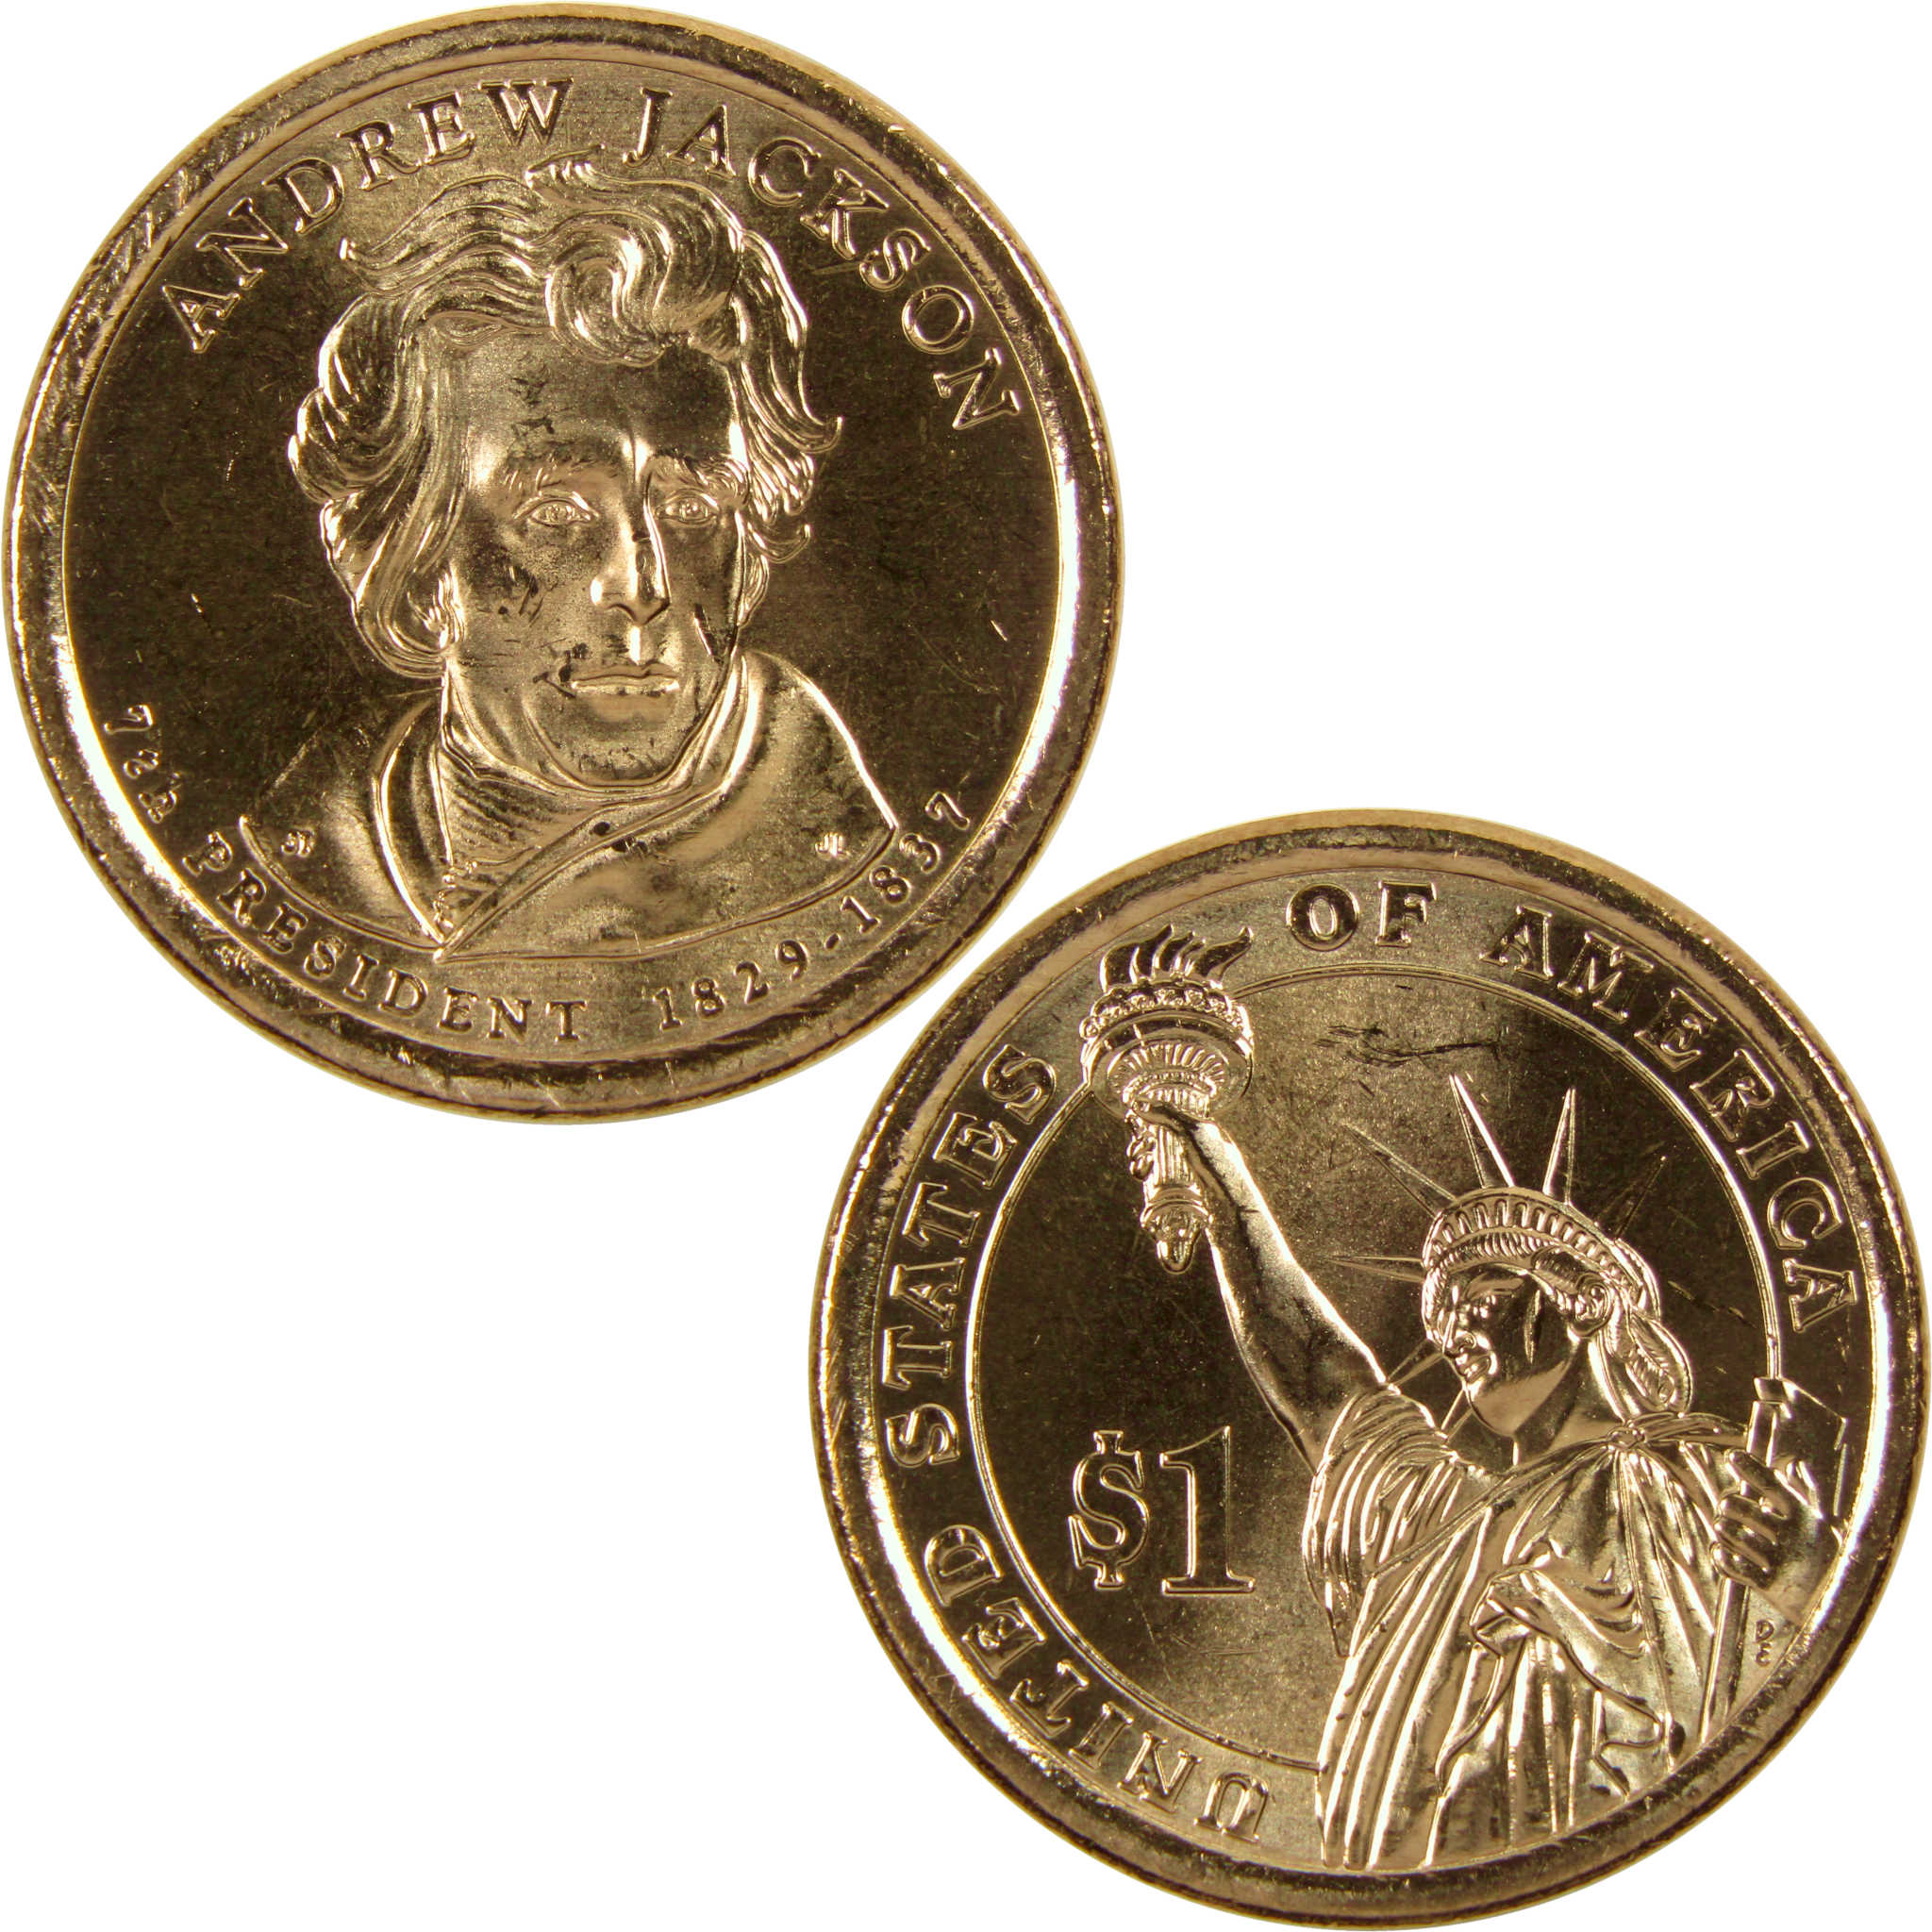 2008 D Andrew Jackson Presidential Dollar BU Uncirculated $1 Coin